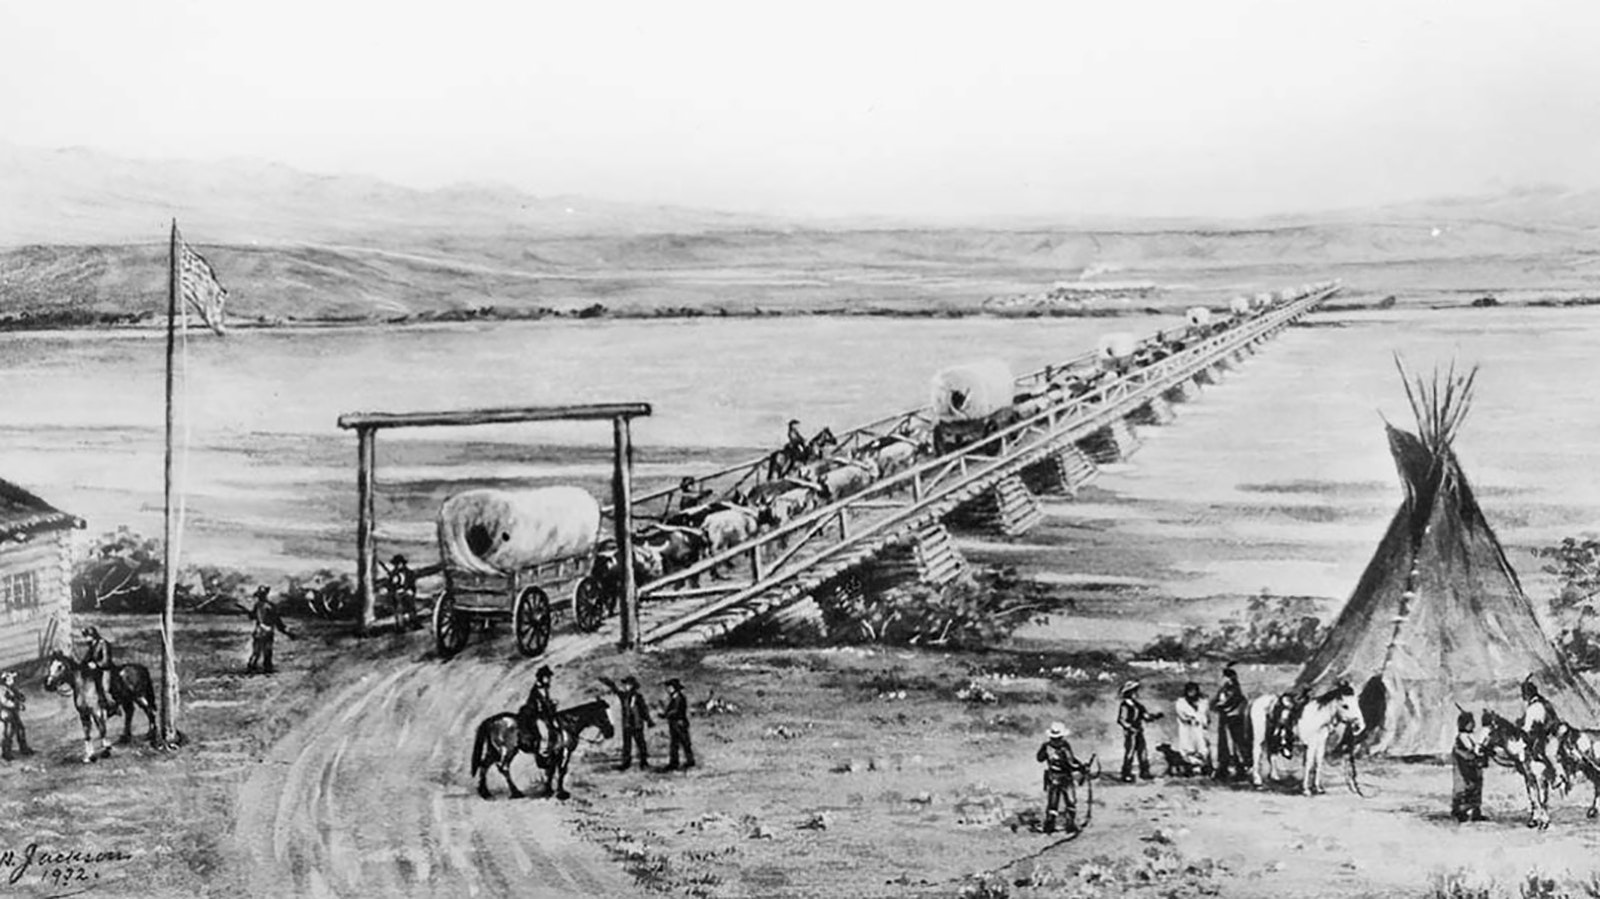 Platte Bridge Station in the Wyoming Territory.